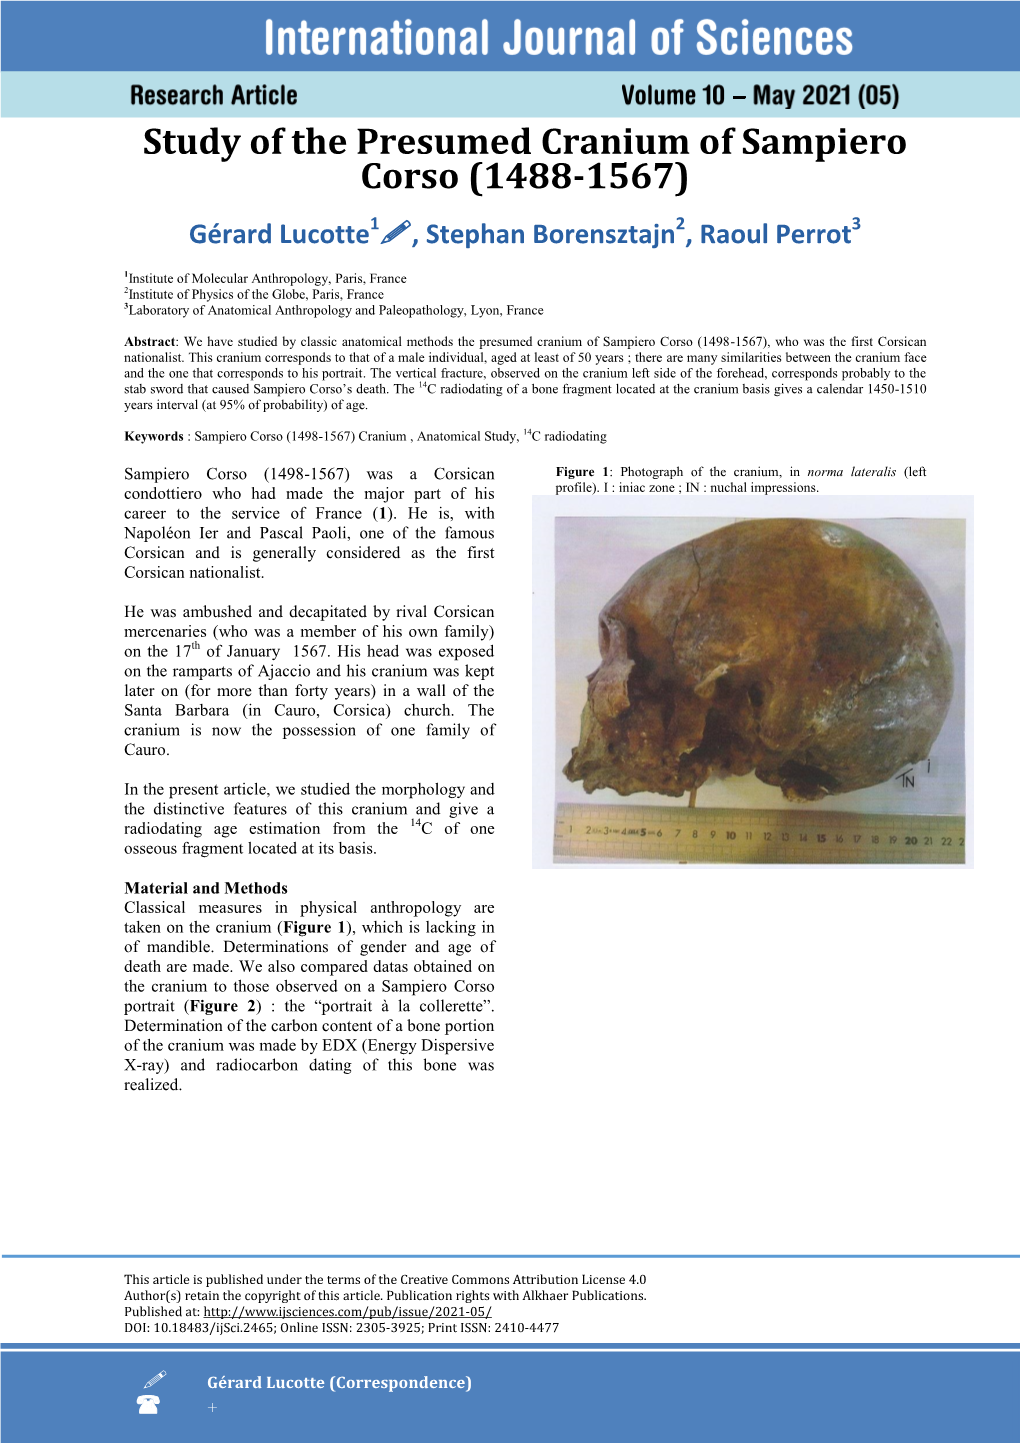 Study of the Presumed Cranium of Sampiero Corso (1488-1567) Gérard Lucotte1, Stephan Borensztajn2, Raoul Perrot3